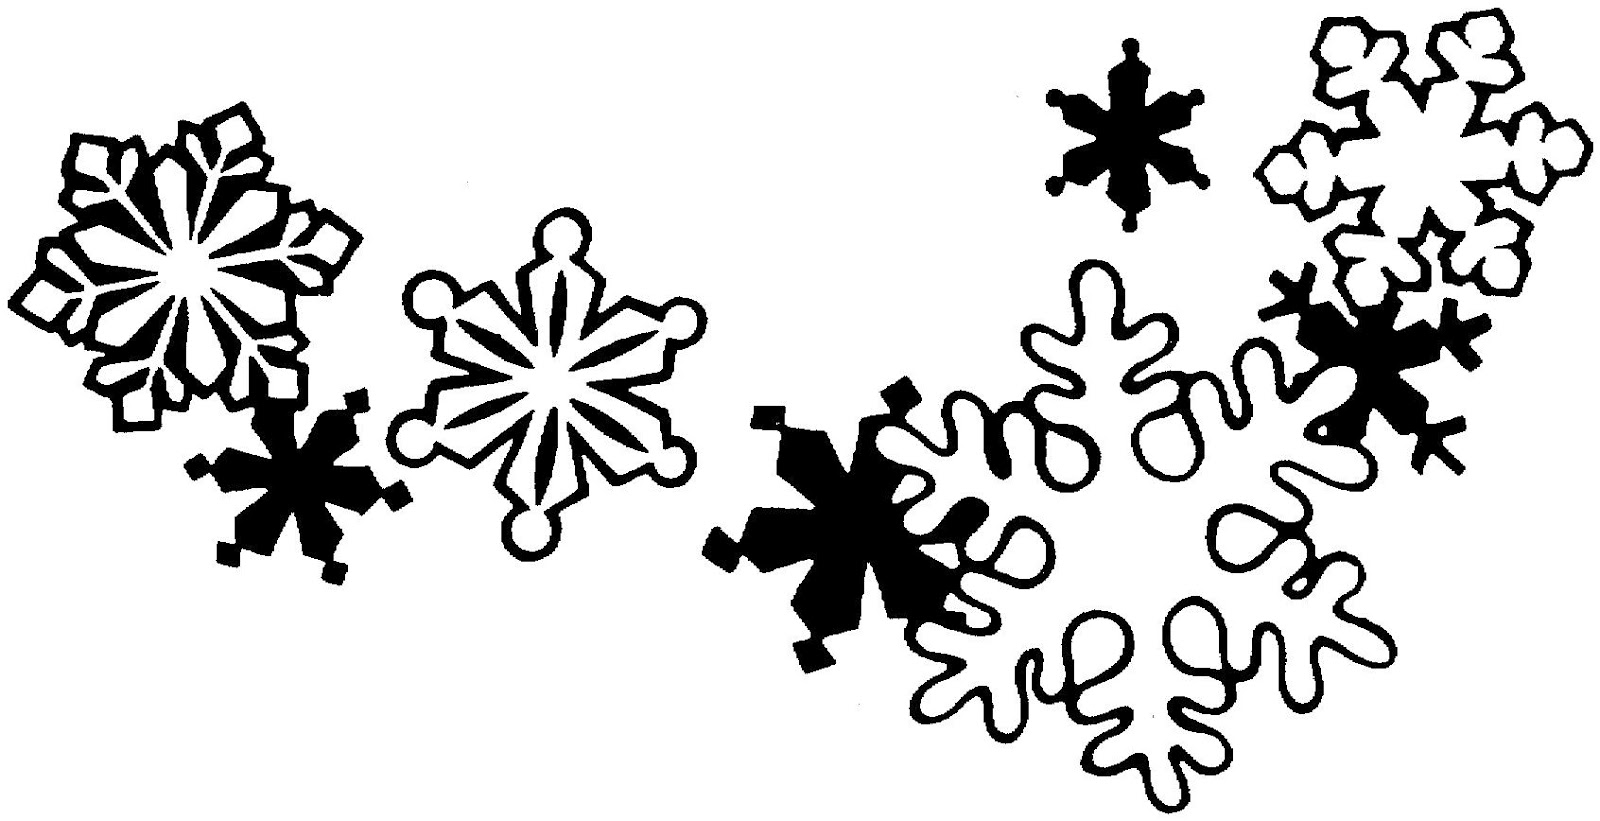 Animated Snowflake Wallpaper